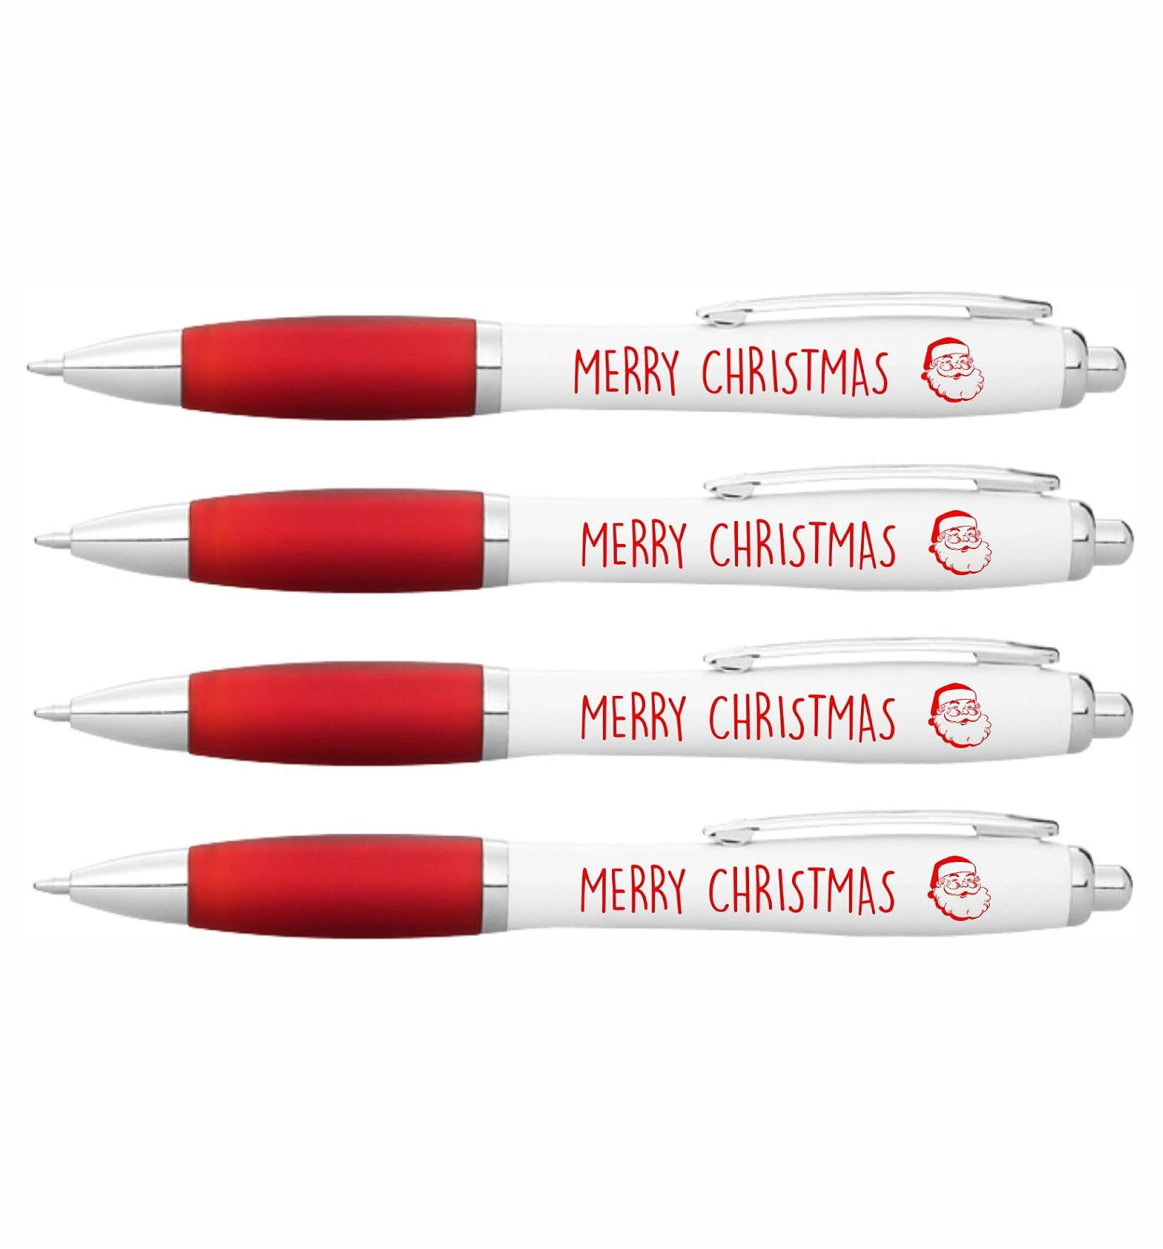 4 x Merry Christmas pens